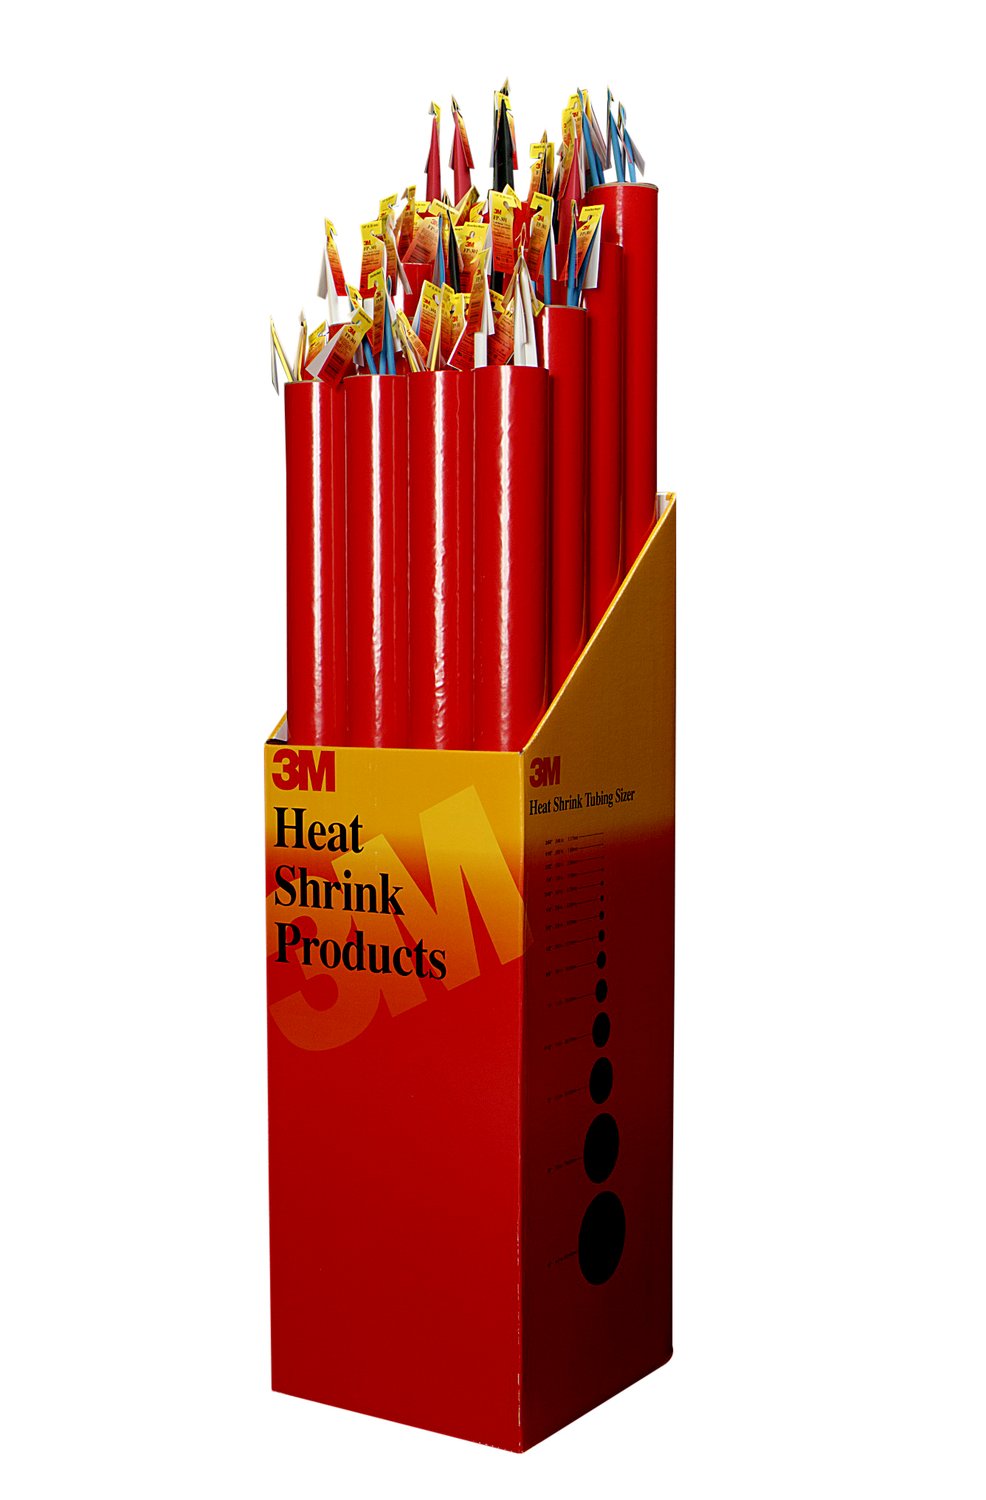 7010400853 - 3M Modified Polyvinylidene Flouride Heat Shrink Tubing
MFP-3/32-48-Clear-Bulk: 4 ft length sticks, 250 per box, 250/Case